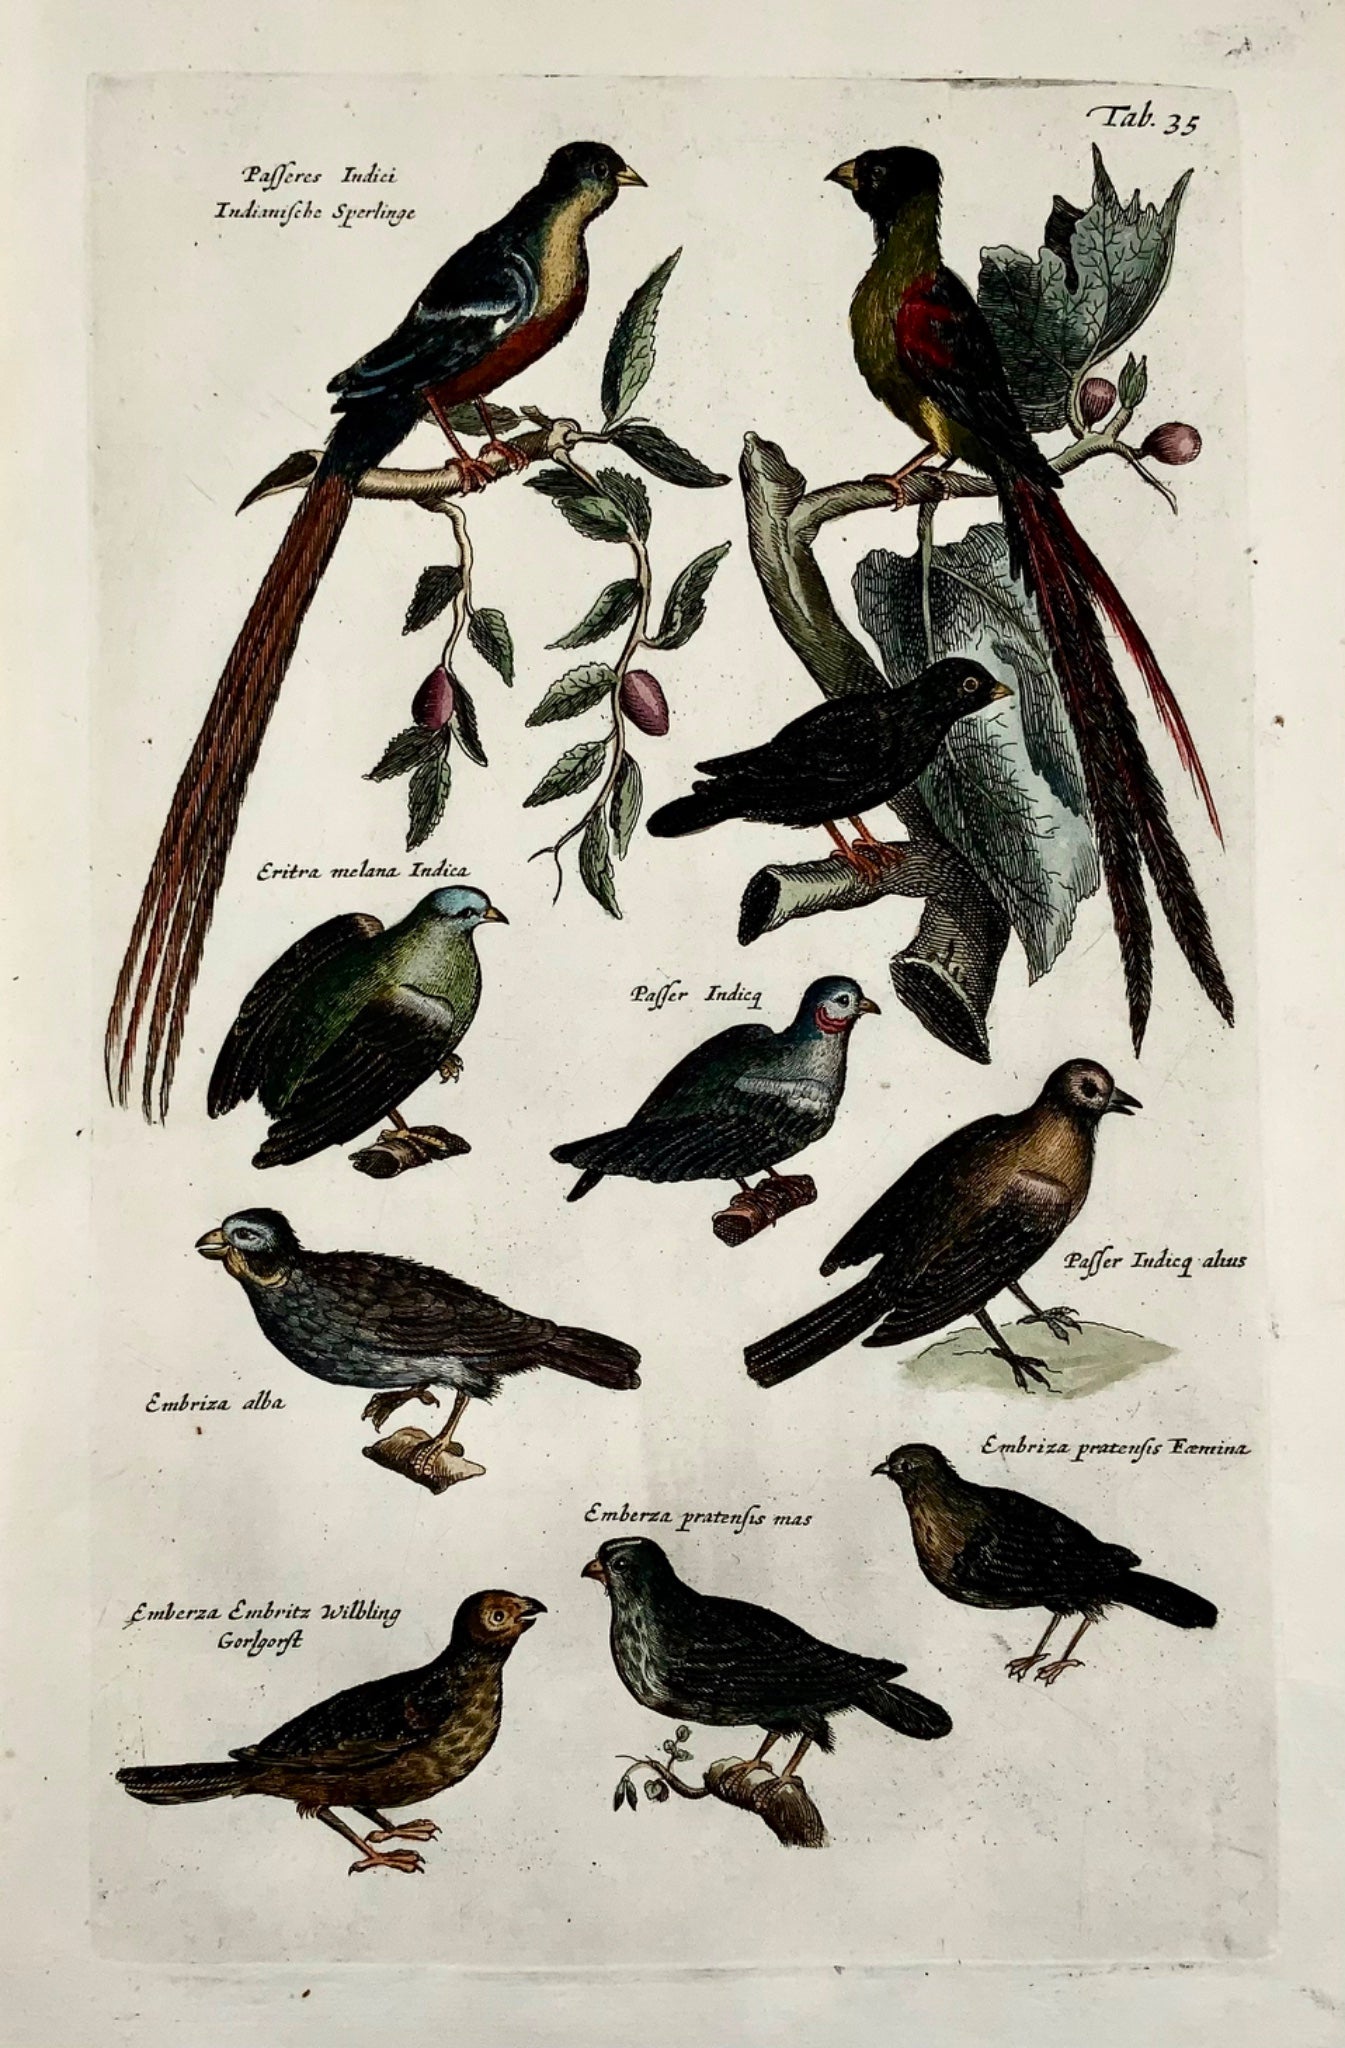 1657 Exotic Sparrows, Bunting, Passerines - MERIAN Folio Handcolored Engraving - Ornithology